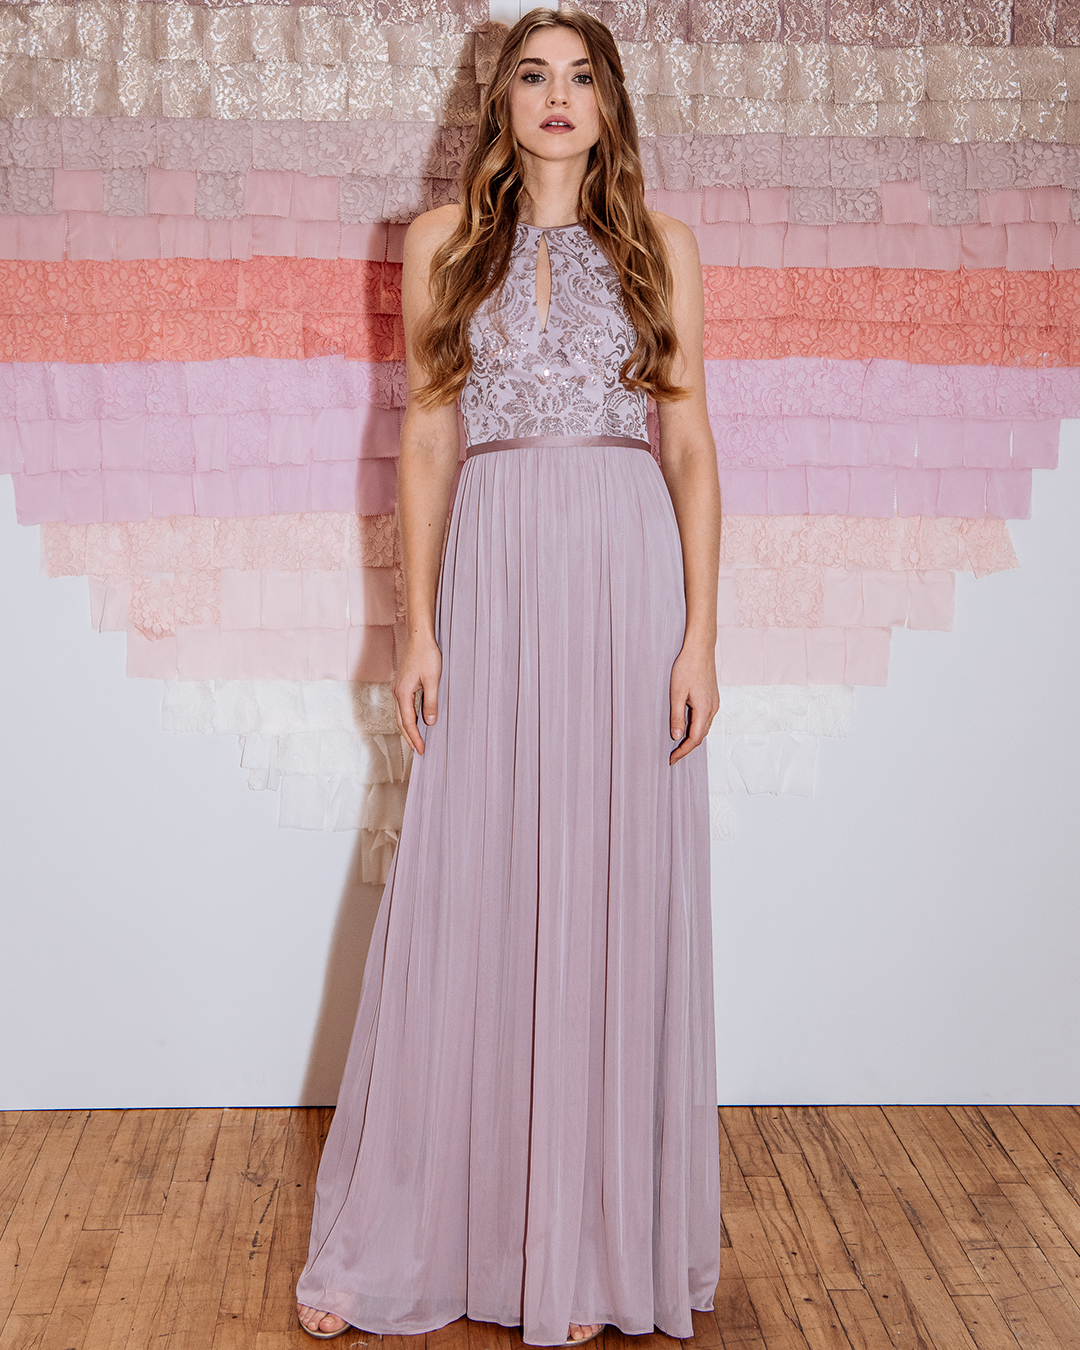 2019 Spring Bridesmaid Dresses | Sparkle & Shine